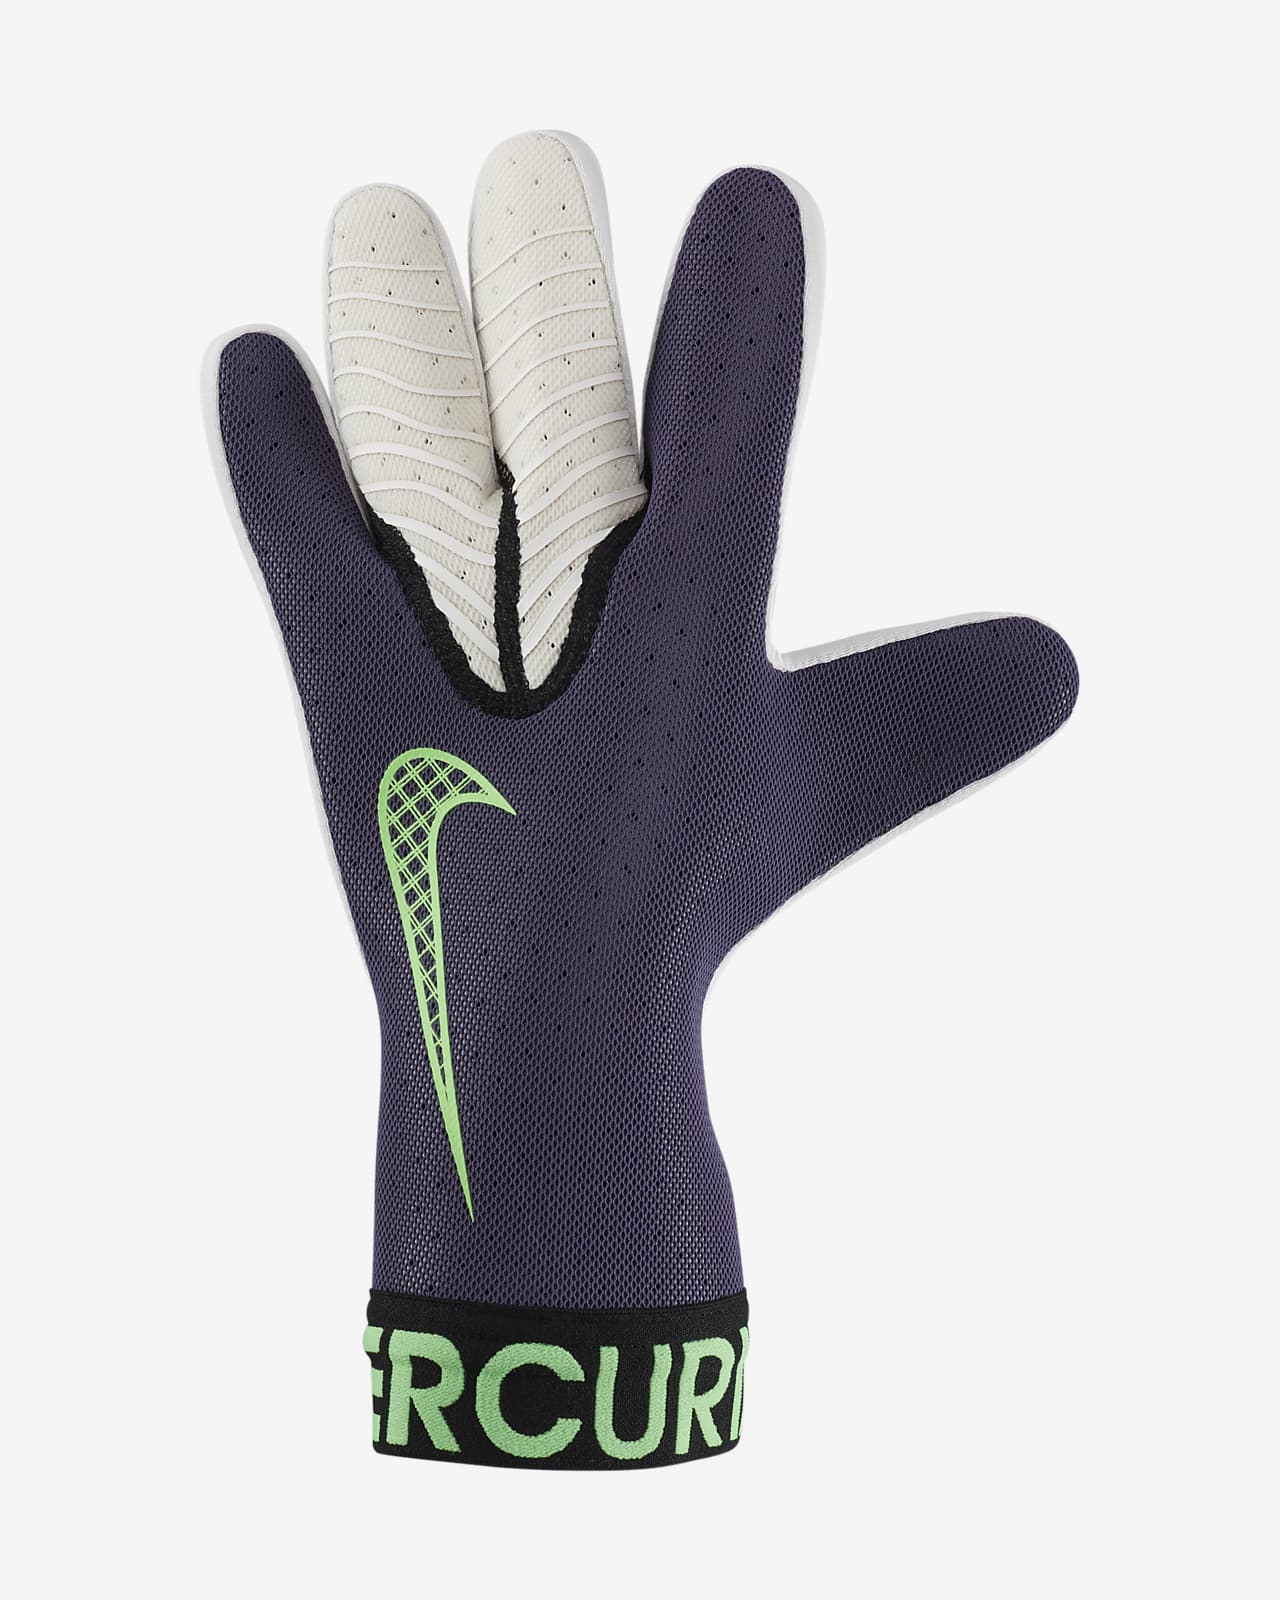 mercurial elite gloves